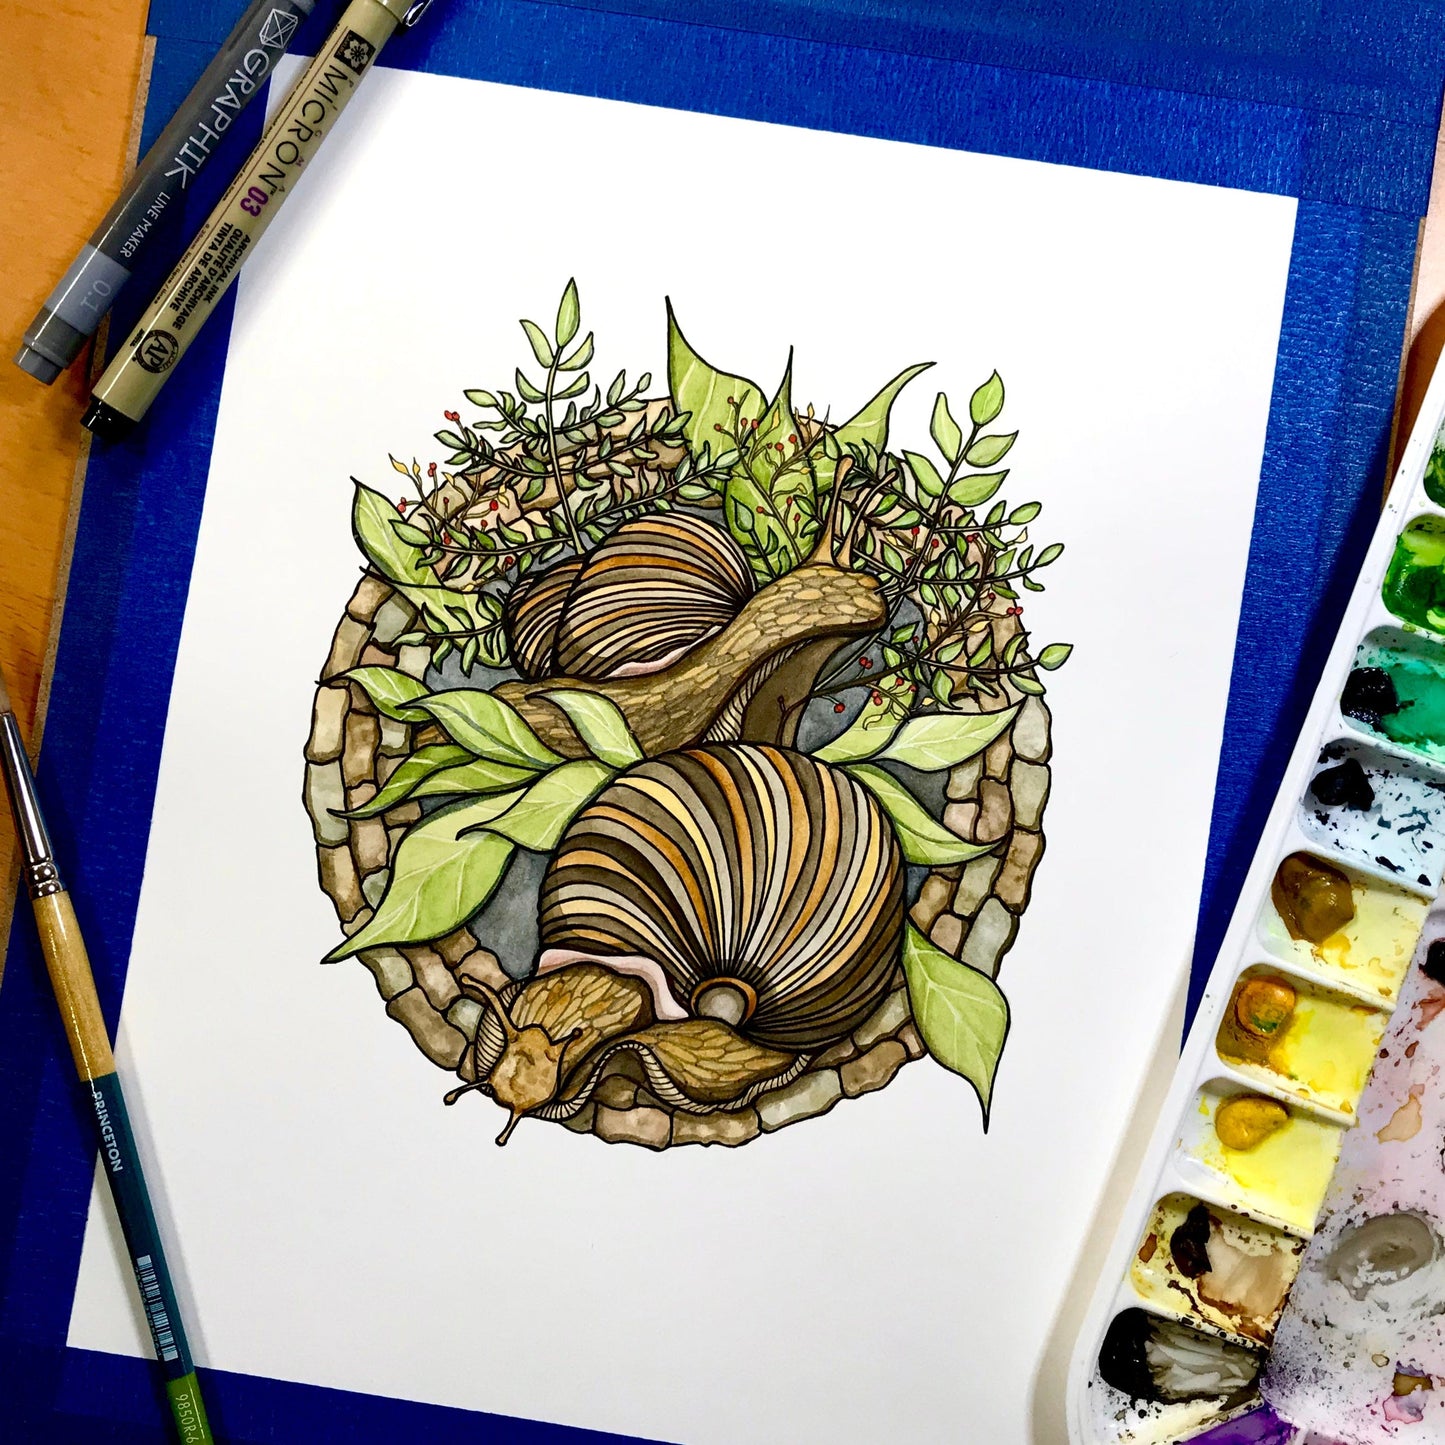 PinkPolish Design Original Art "Snail Garden" Original Watercolor & Ink Illustration